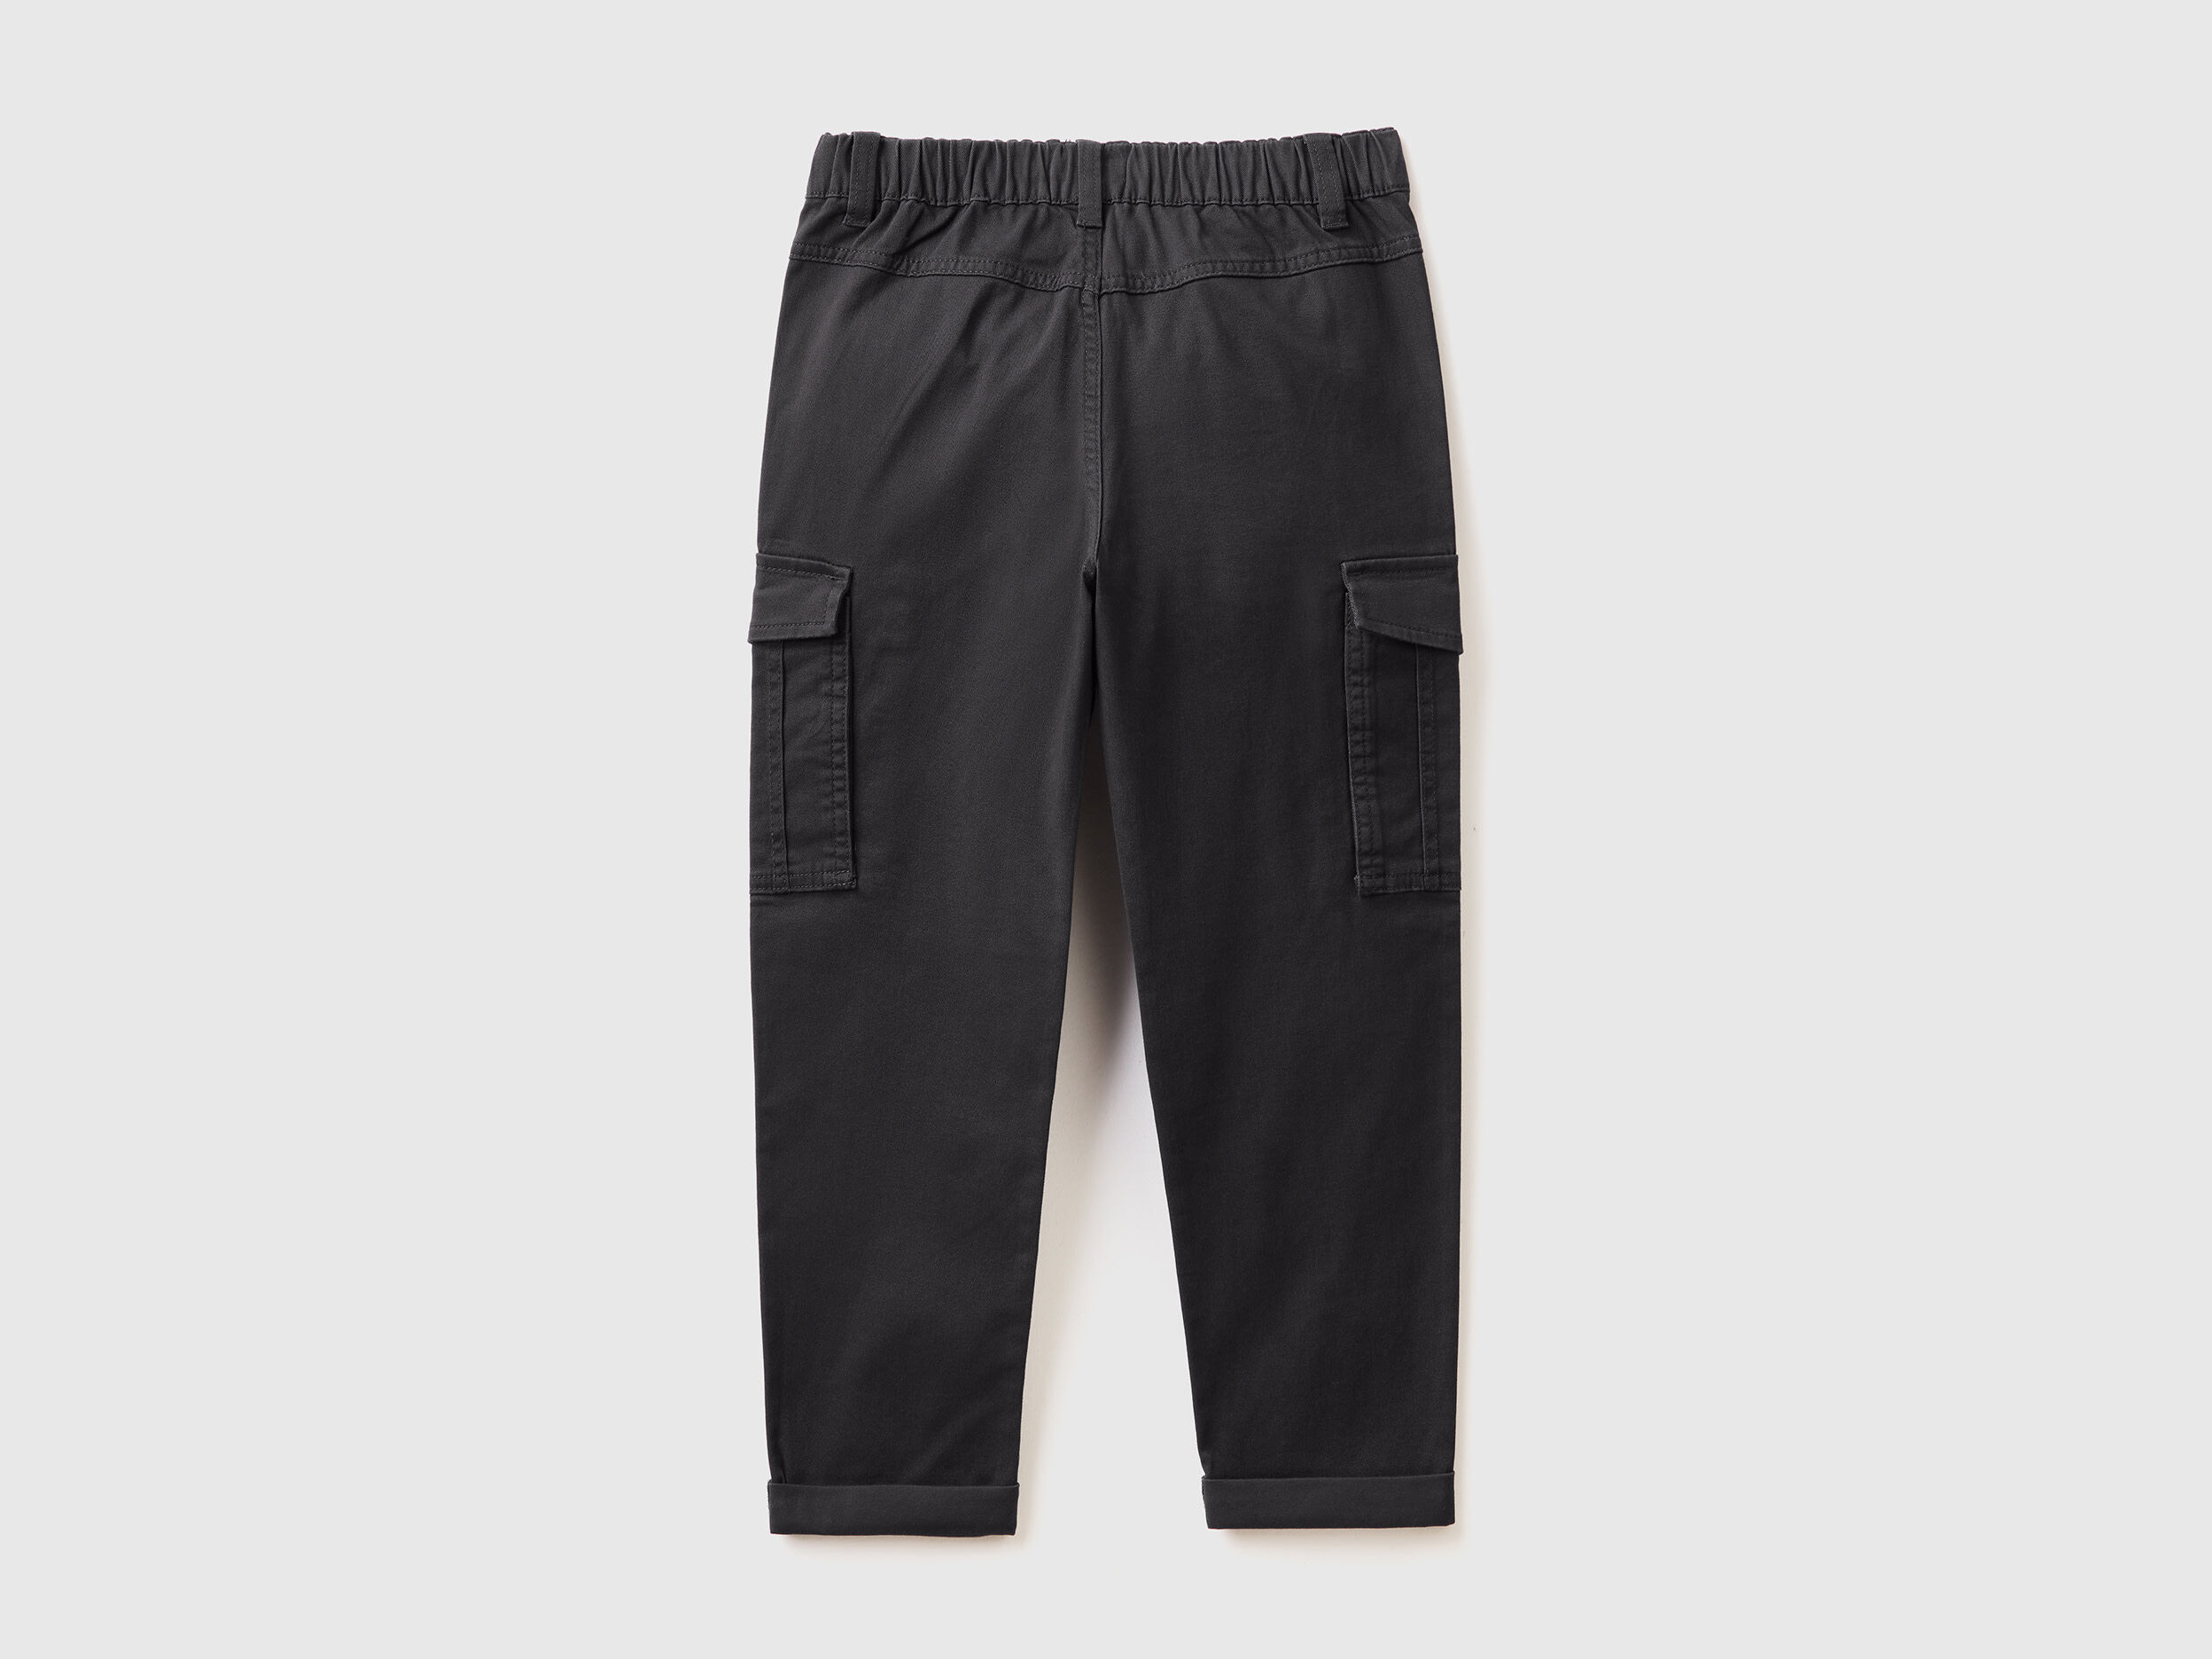 OrcaJump – Mens 100% Cotton Multi-Pocket Solid Color Cargo Pants – Army  Green & Khaki Micro-Elastic Full-Length Casual Workwear | Cargo pants men,  Mens work pants, Tactical pants